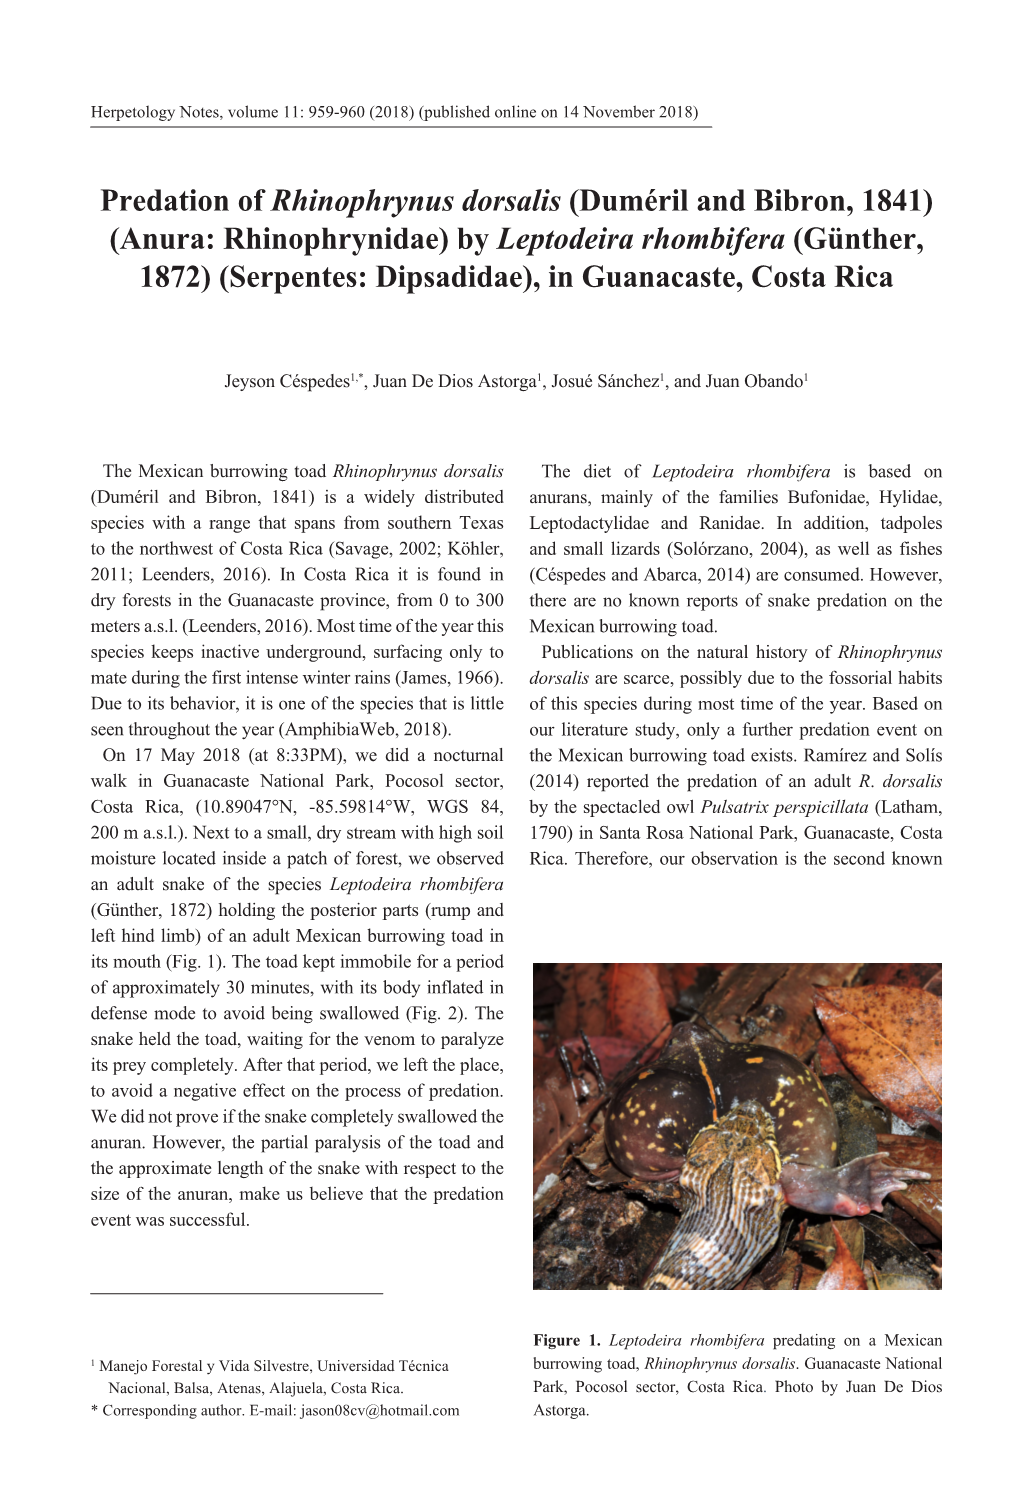 By Leptodeira Rhombifera (Günther, 1872) (Serpentes: Dipsadidae), in Guanacaste, Costa Rica